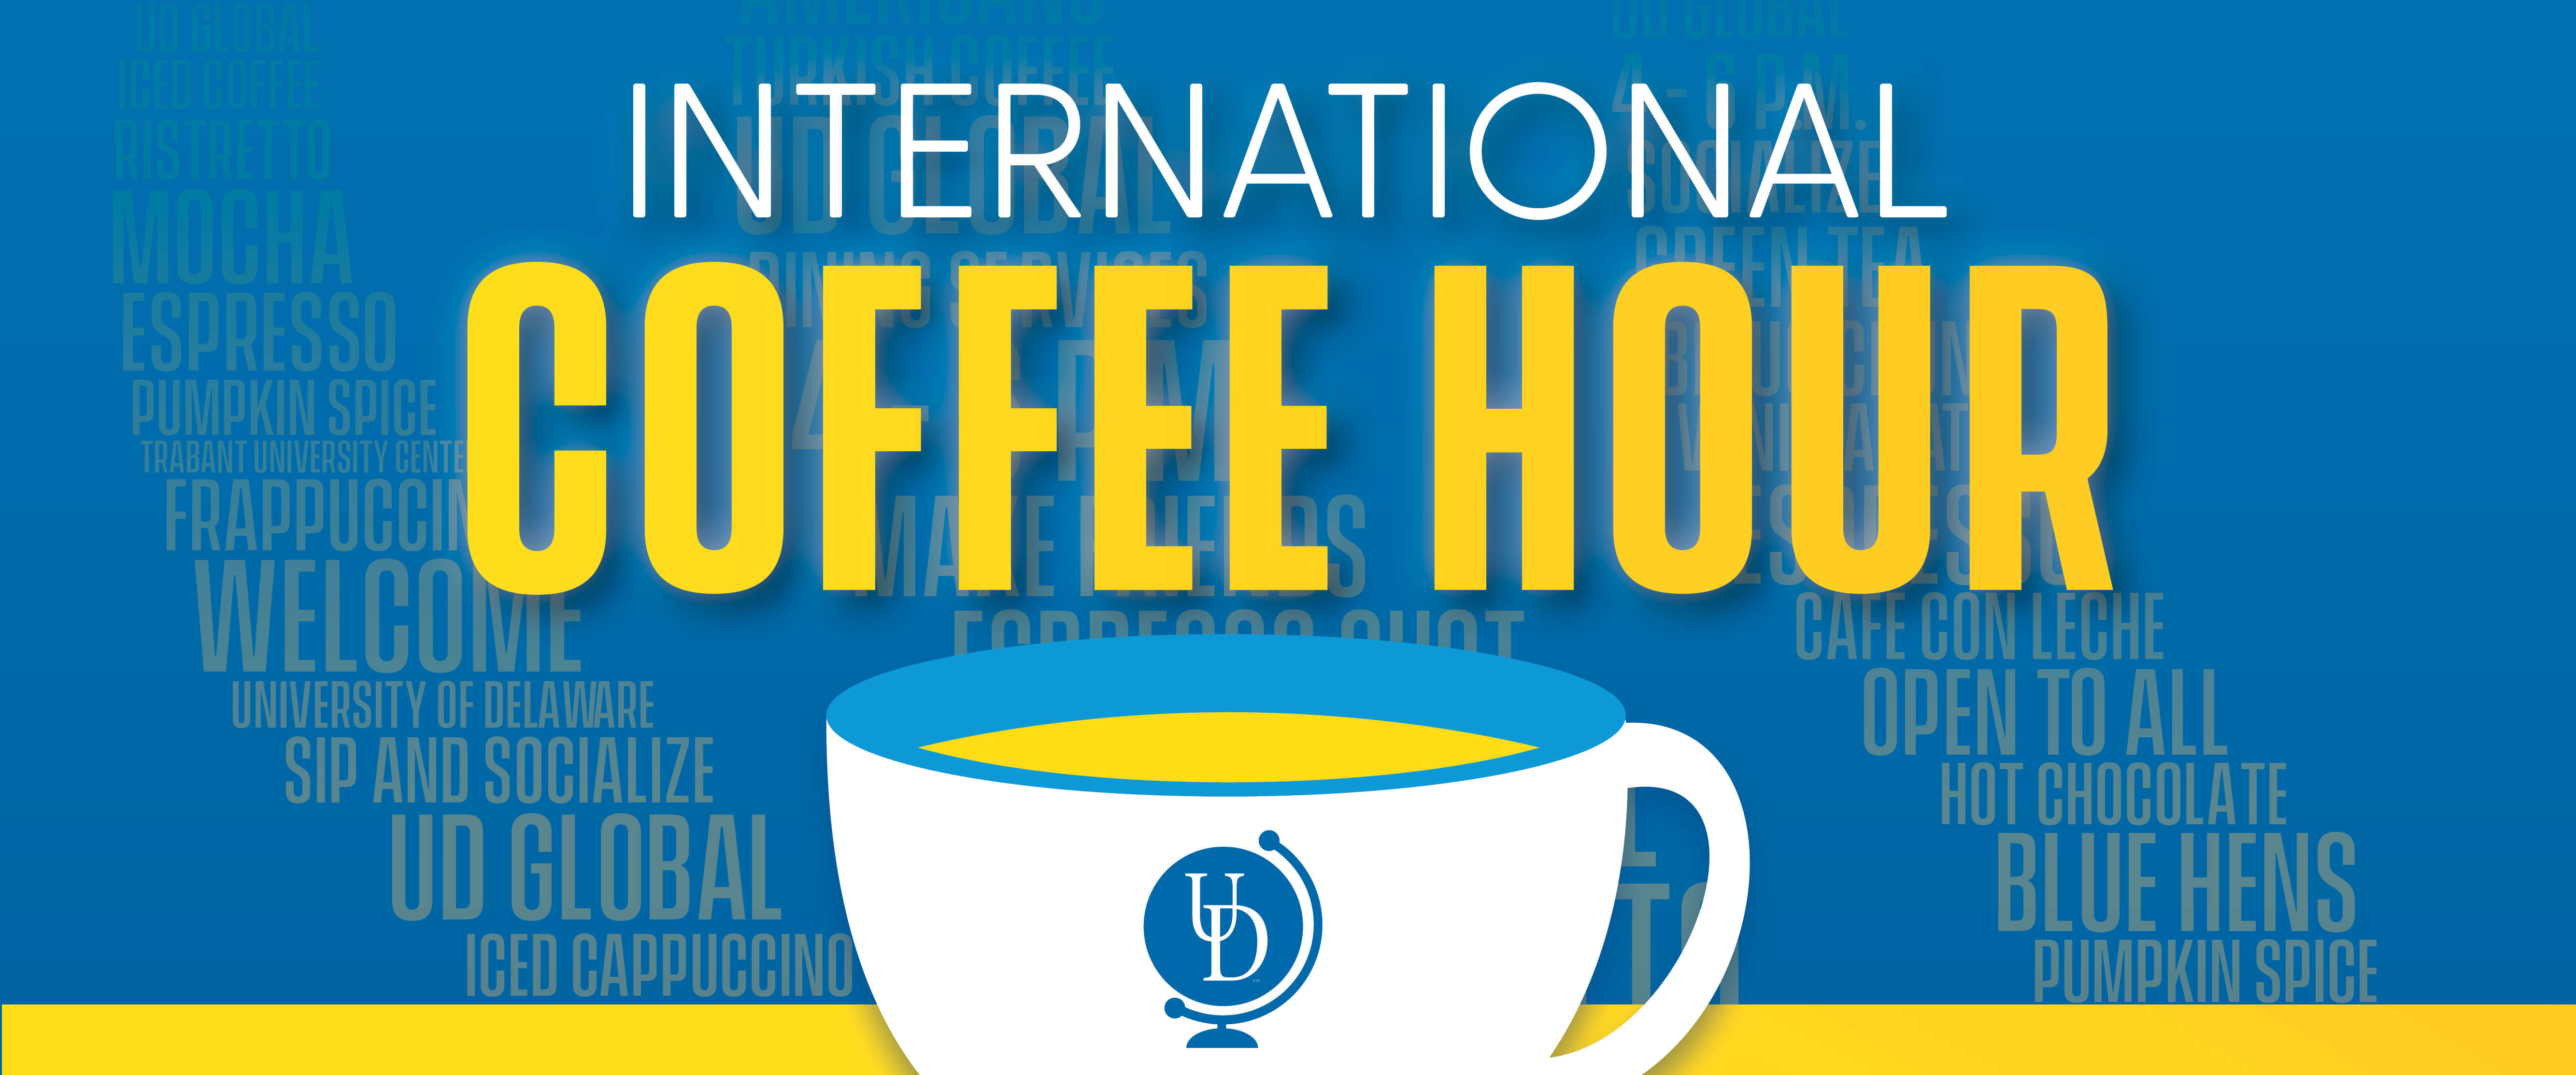 International Coffee Hour CGPS University of Delaware